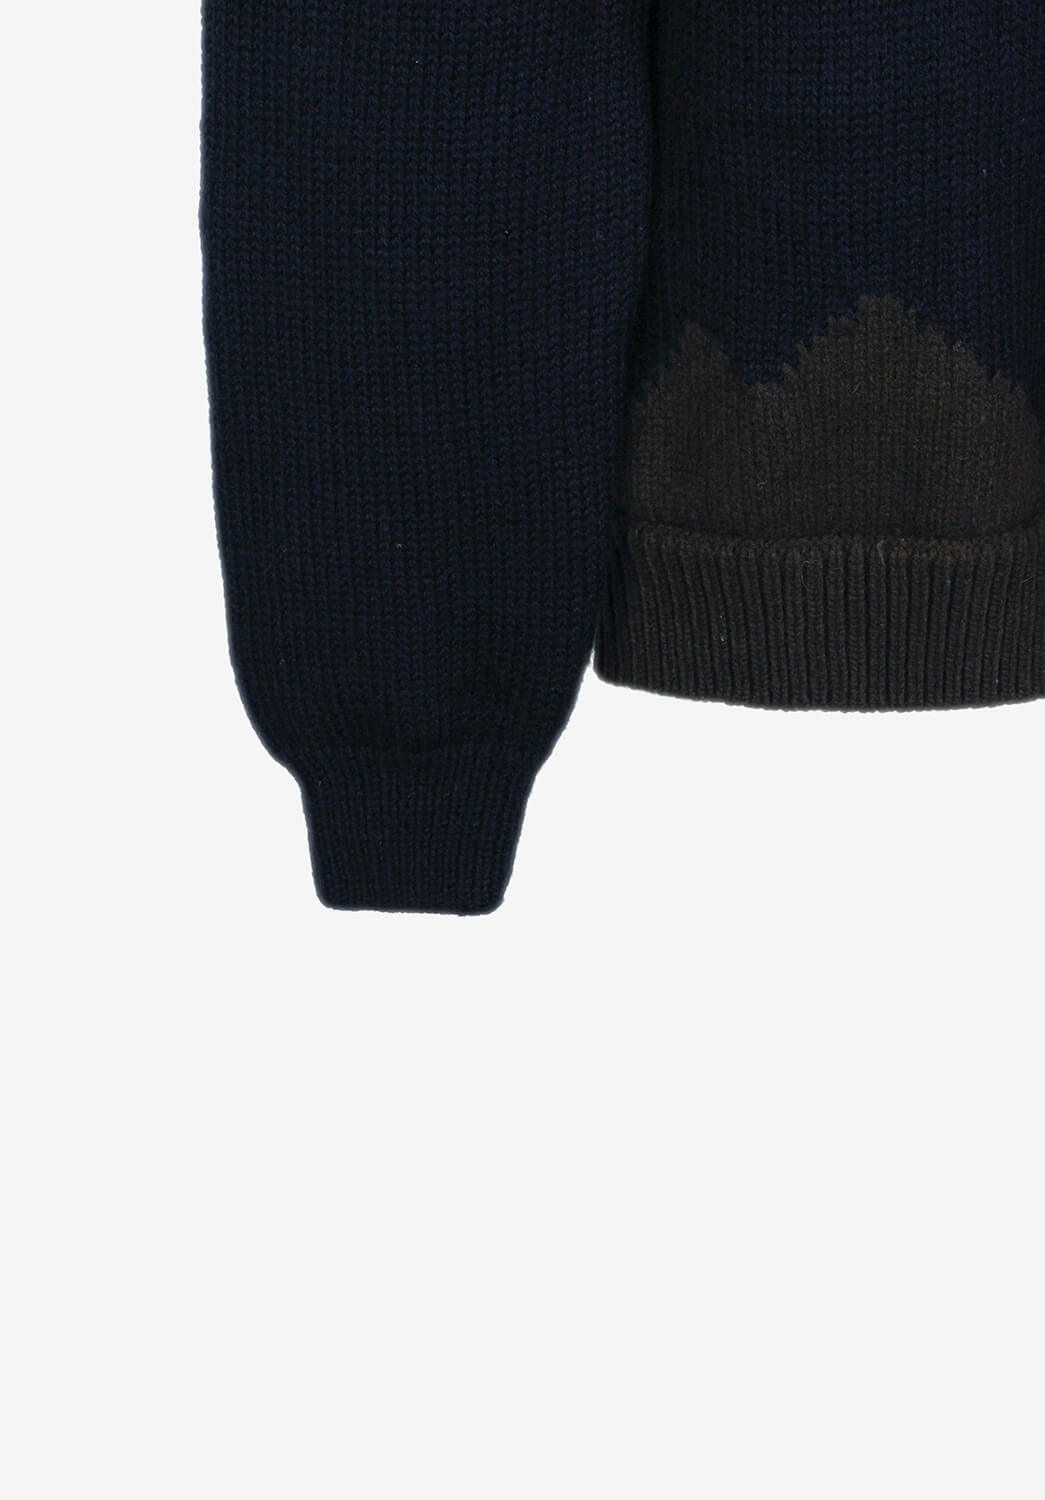 Vyriškas Moncler vintažinis megztinis